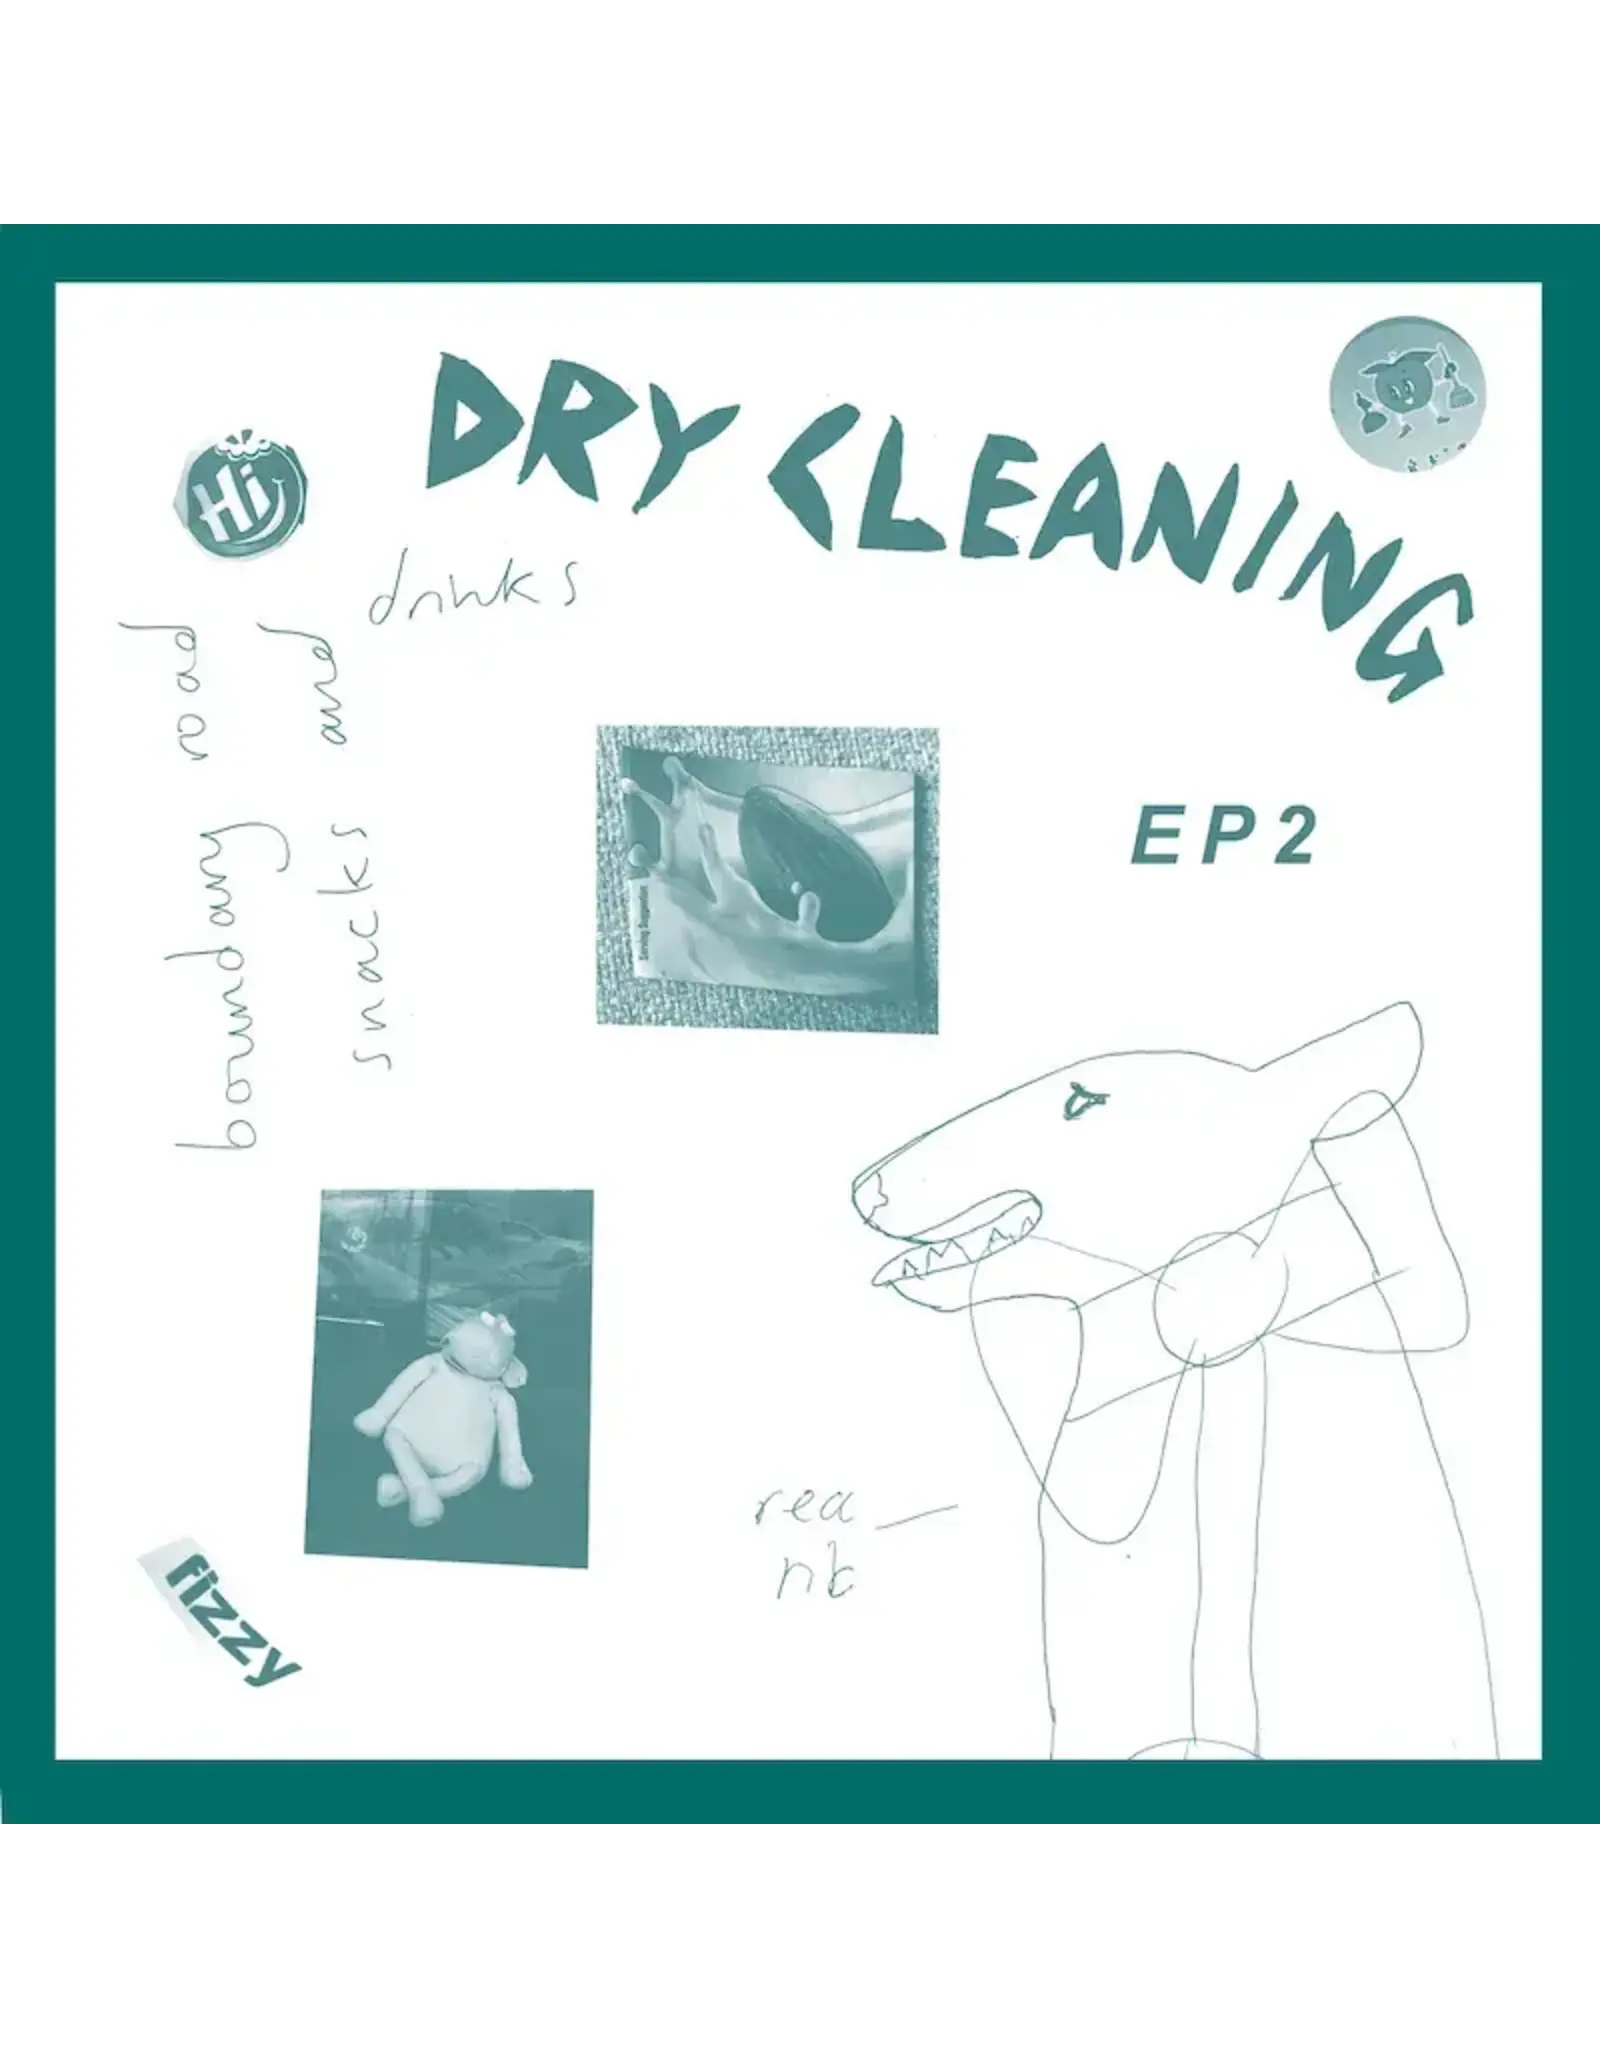 Dry Cleaning - Boundary Road Snacks & Drinks + Sweet Princess EP (Exclusive Blue Vinyl)